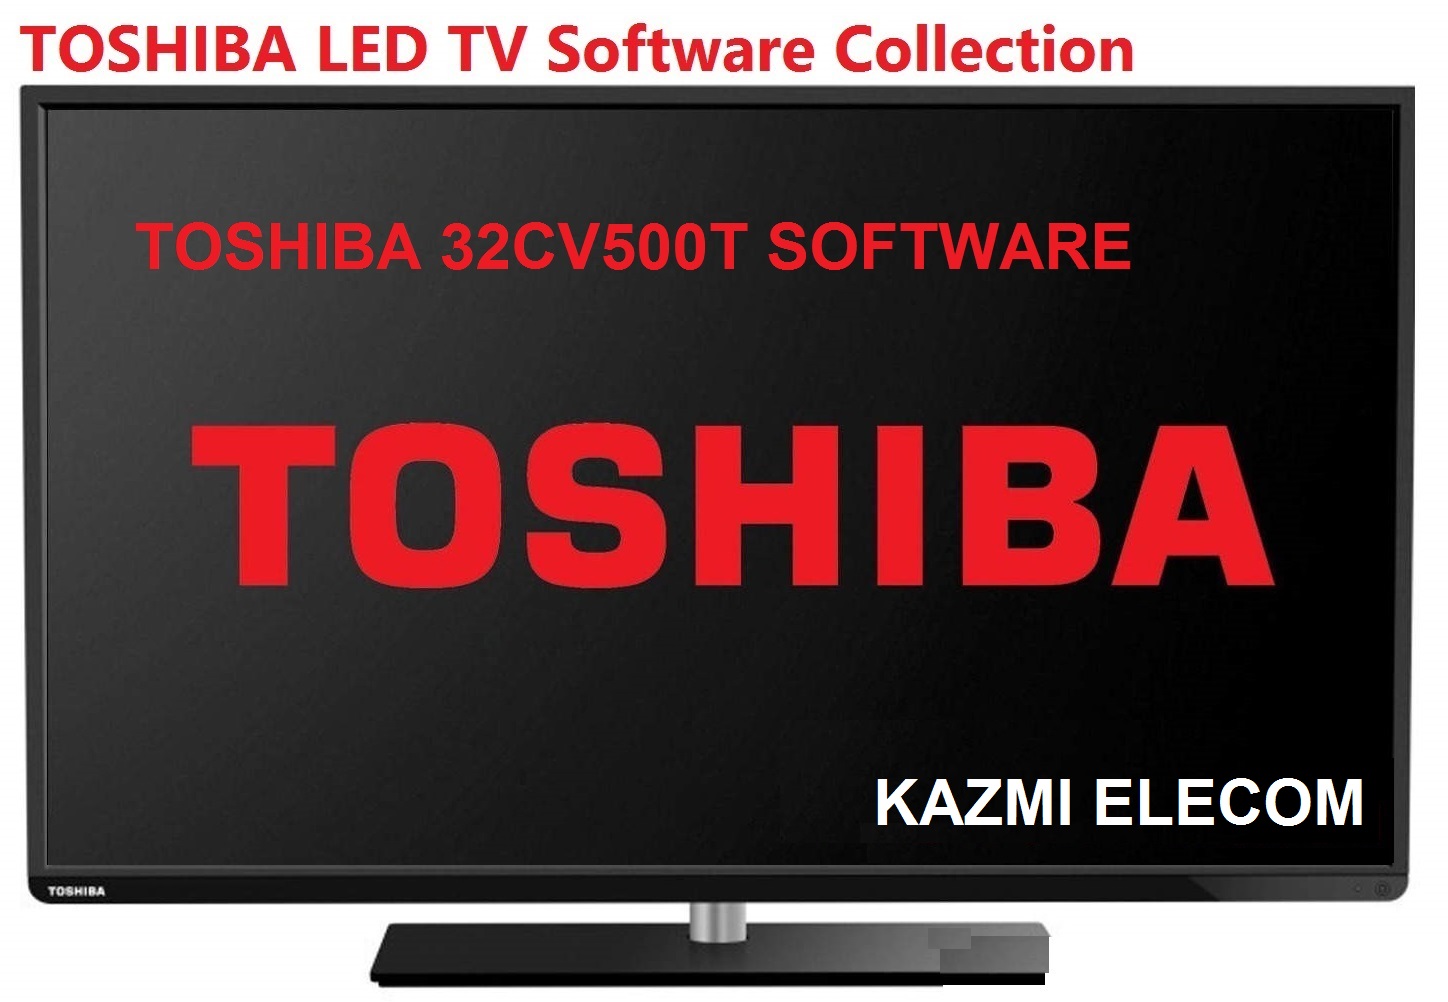 Toshiba 32Cv500T